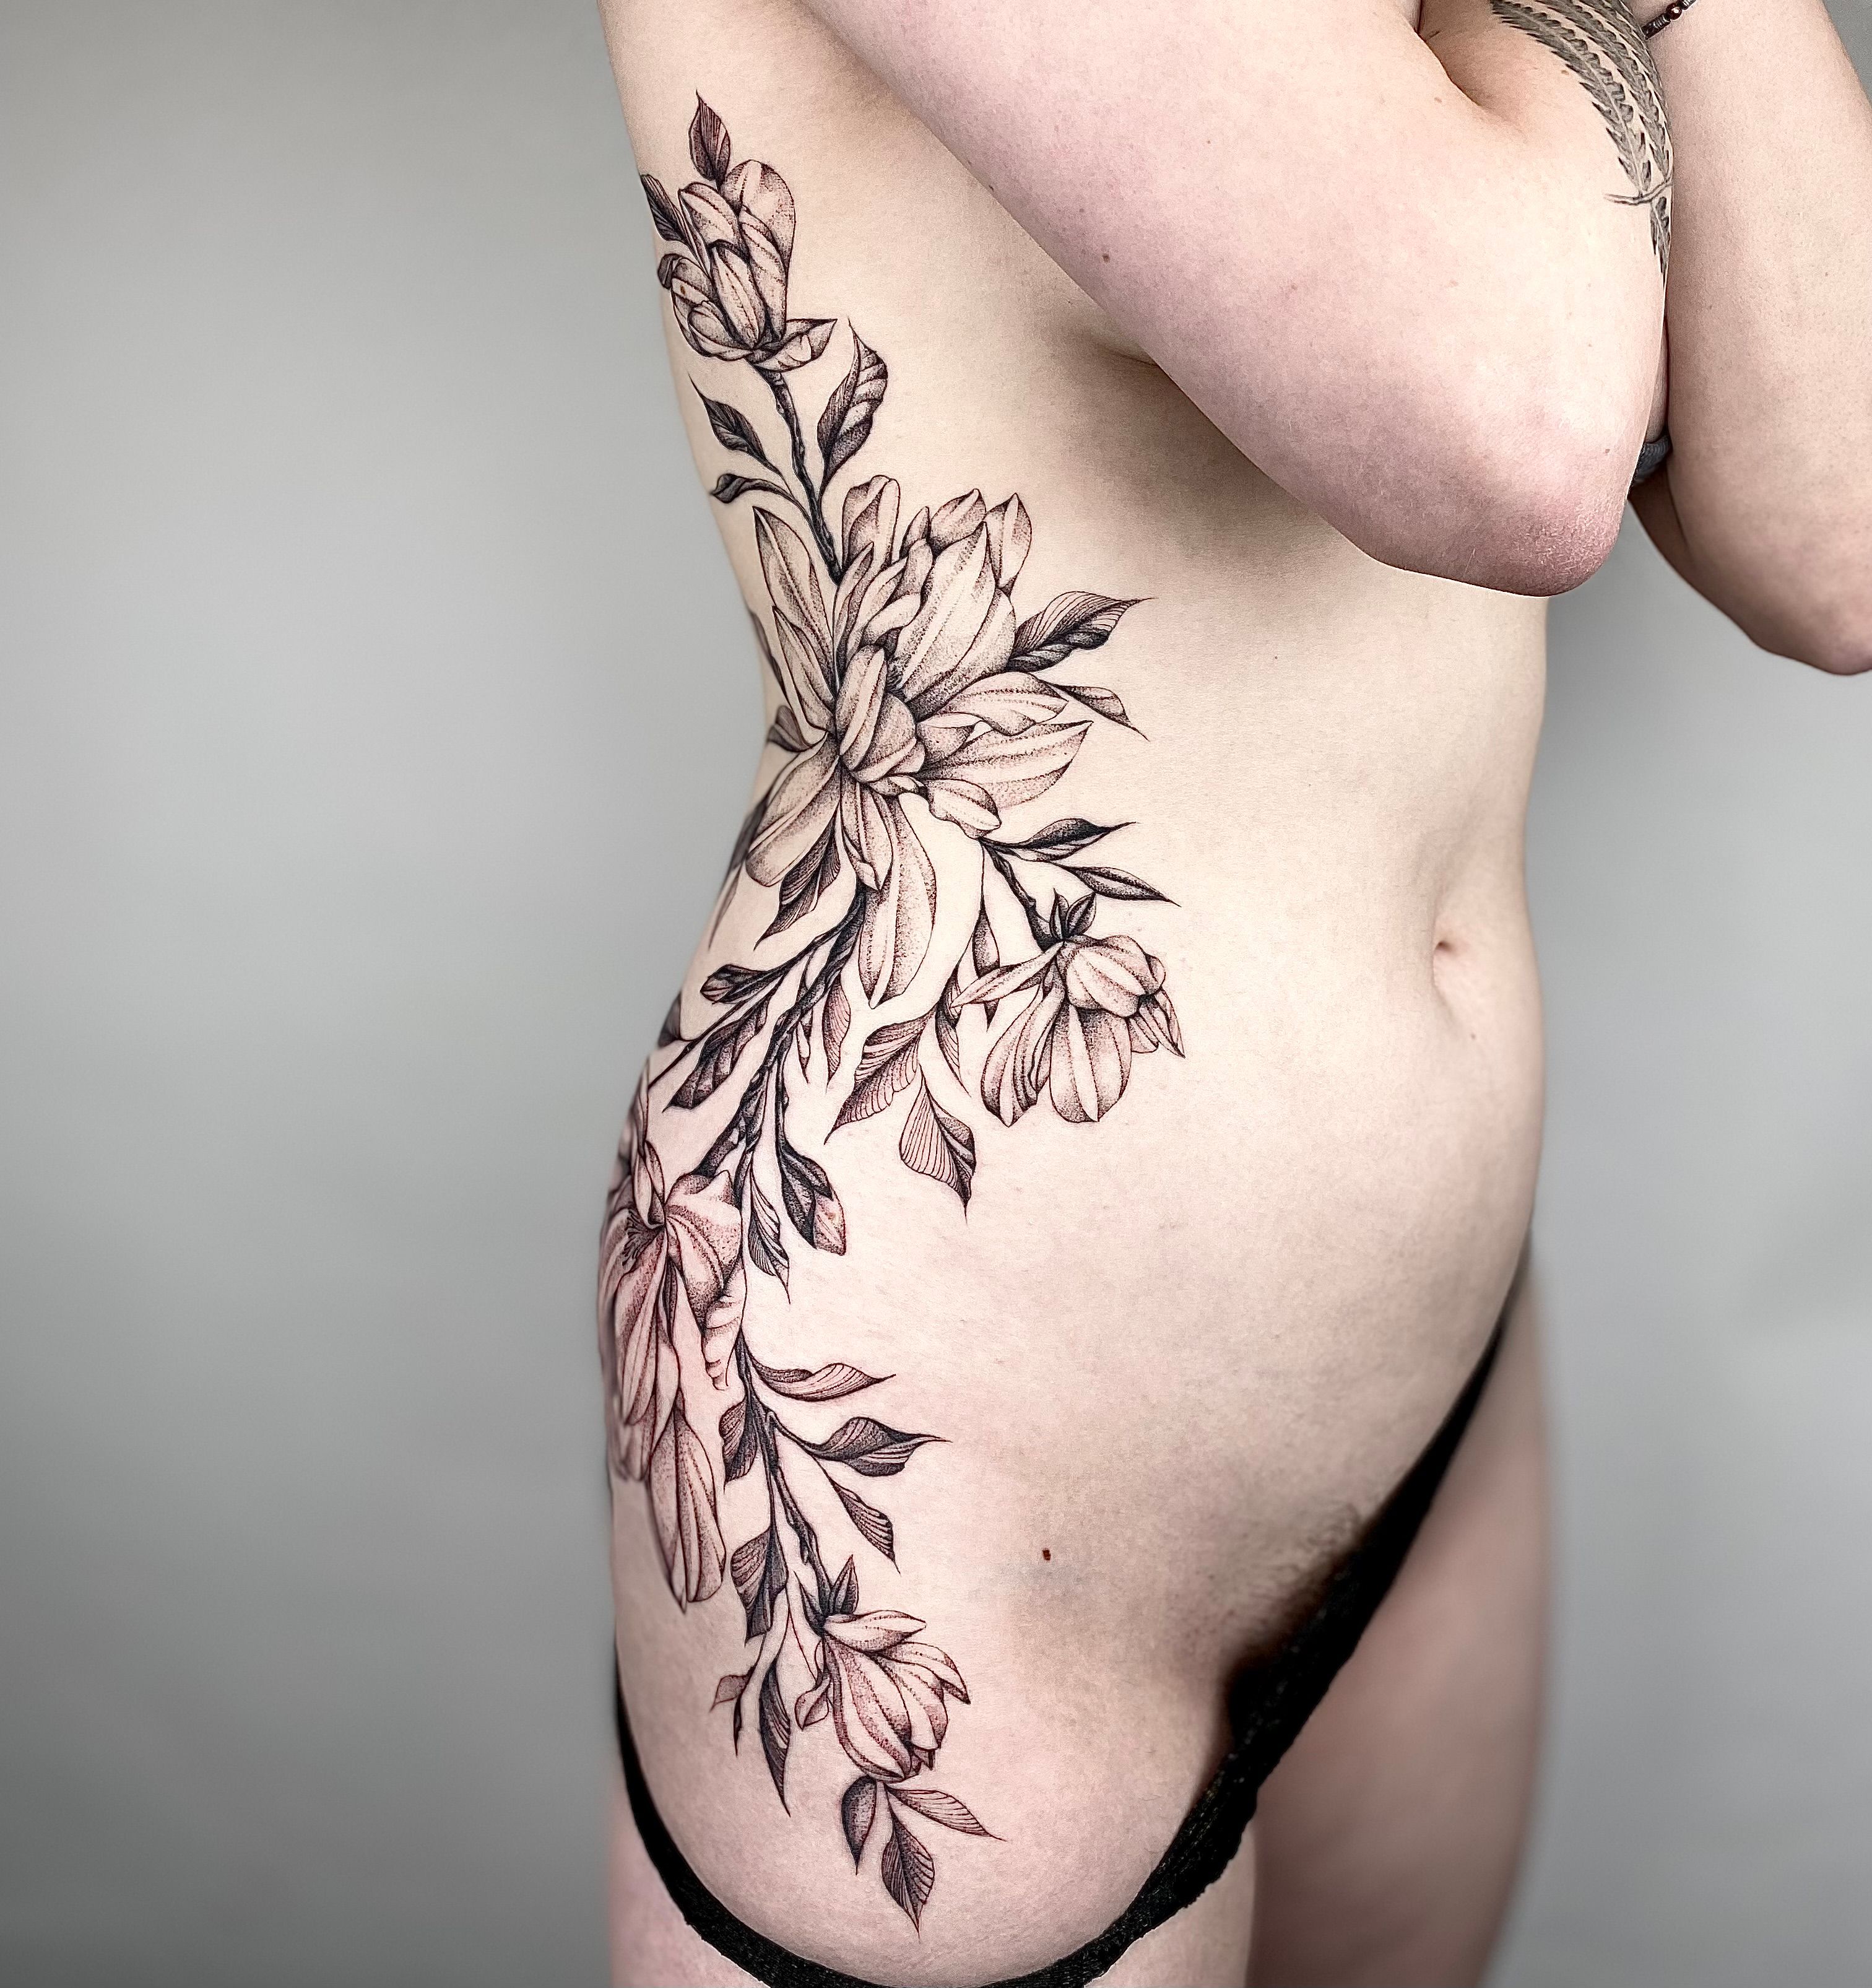 Hip Tattoo Ideas | POPSUGAR Beauty